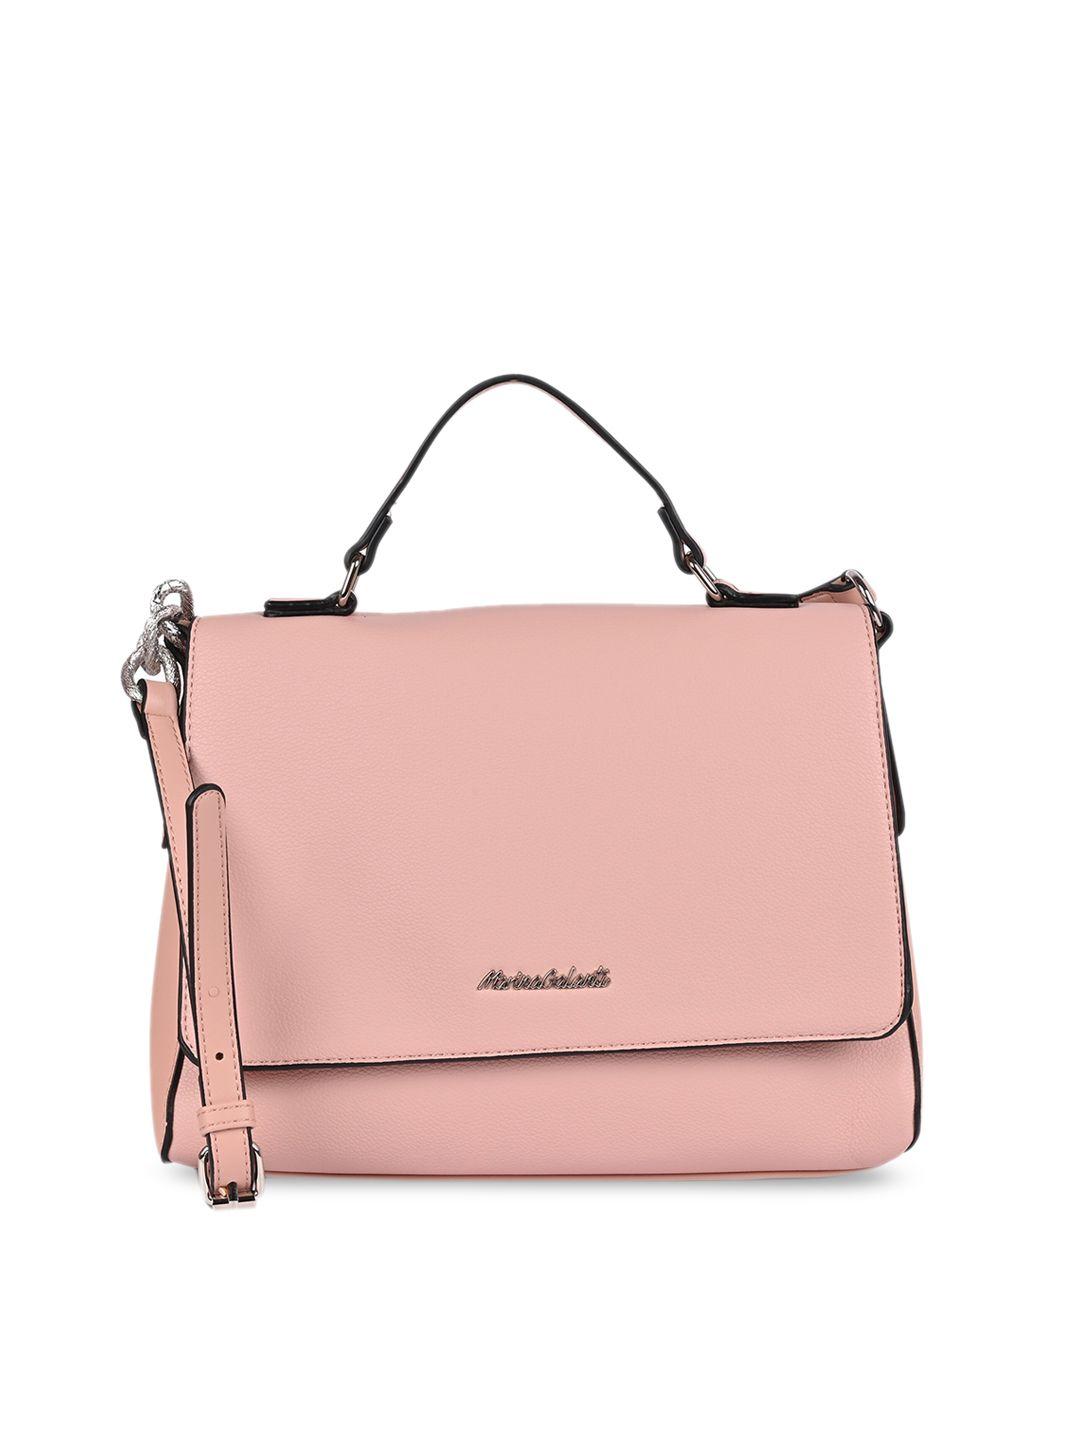 marina galanti pink structured handheld bag